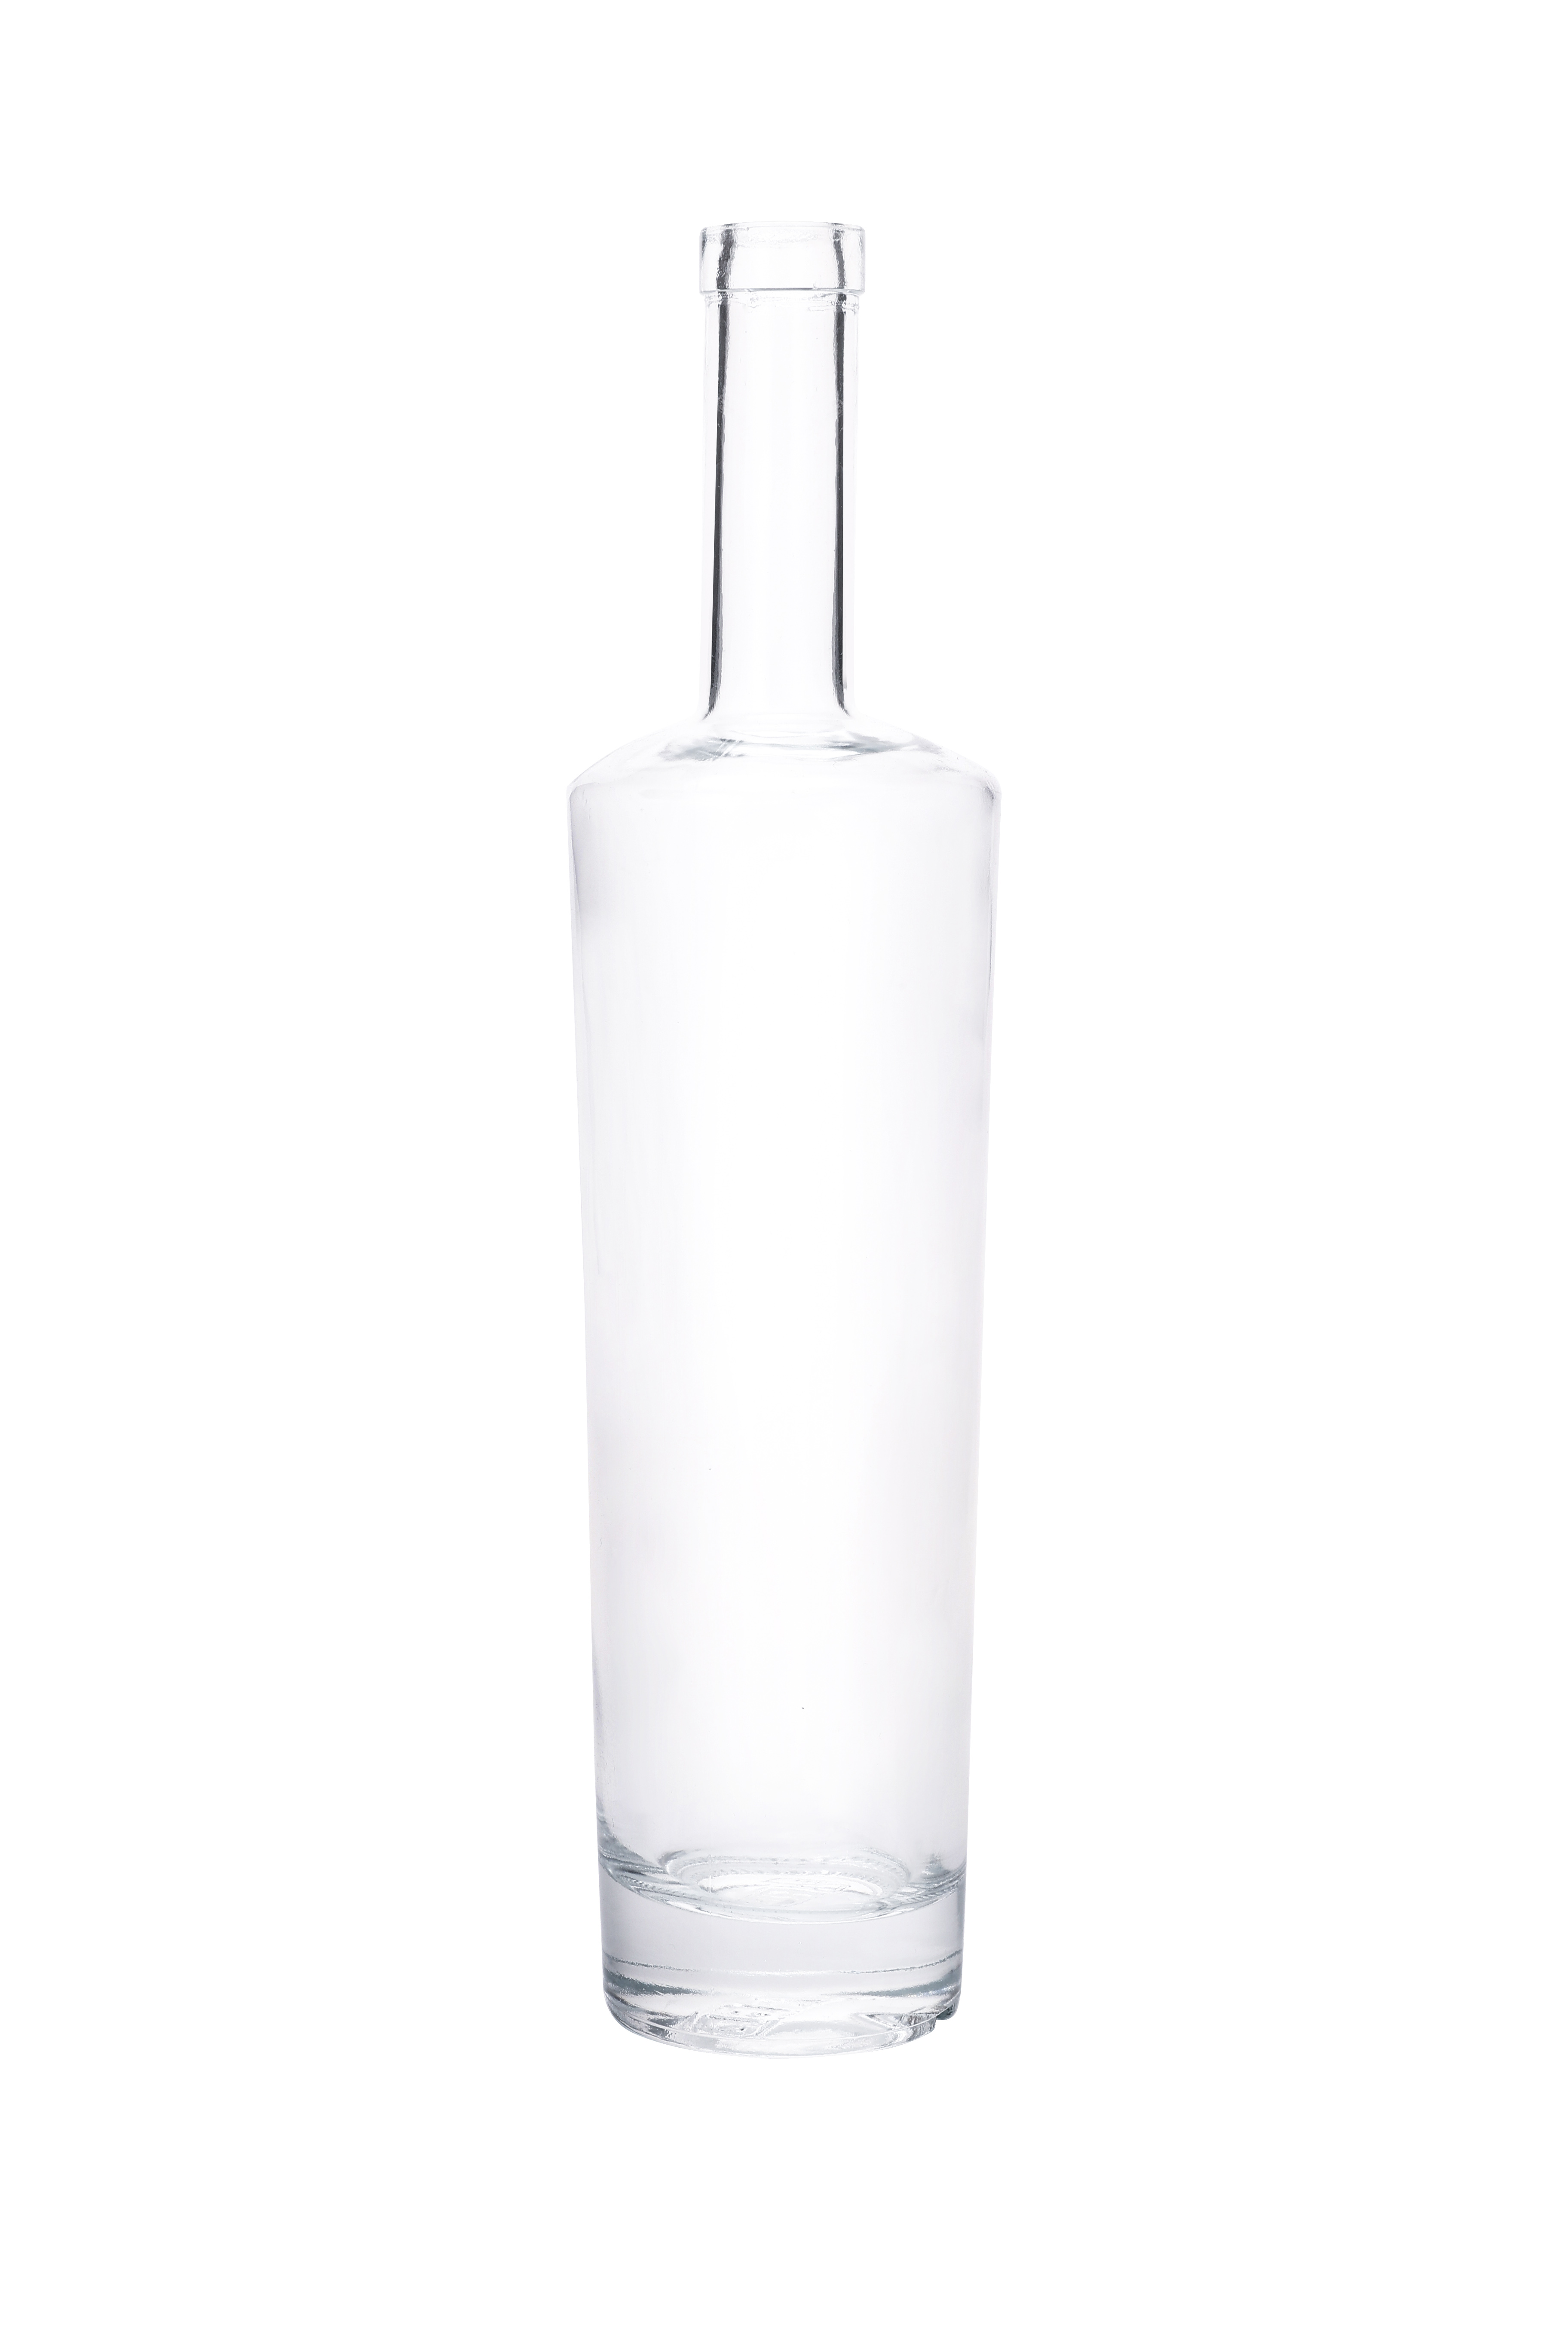 Wholesale 750ml 500ml 375ml 200ml Vodka Spirit Gin Rum Glass Liquor Bottle with Cork